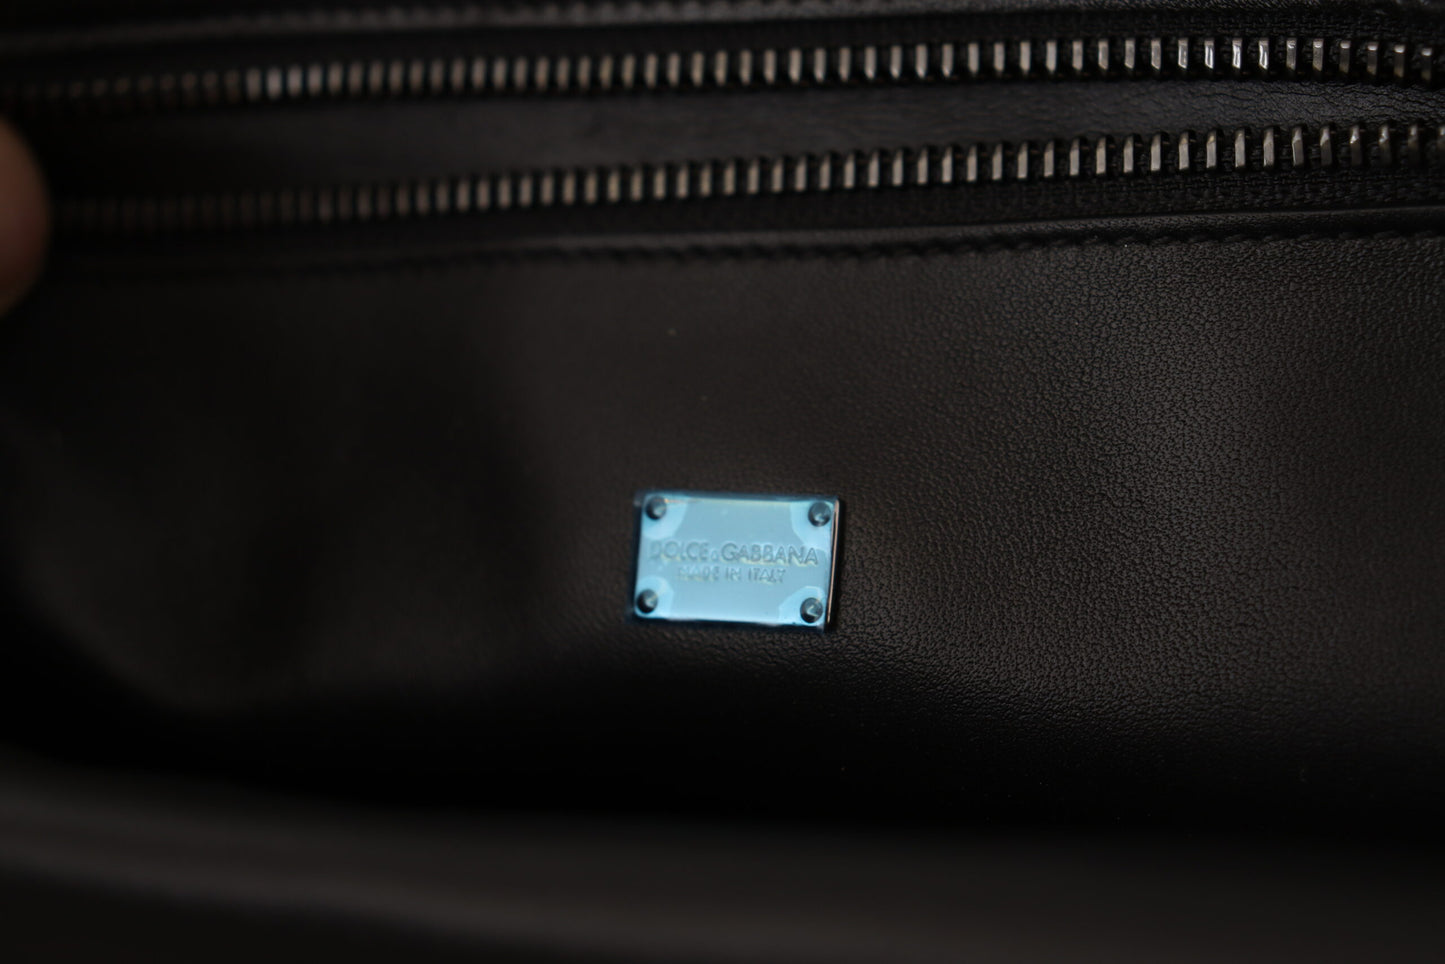 Dolce &amp; Gabbana Black Jacquard Leather Document Briefcase Bag